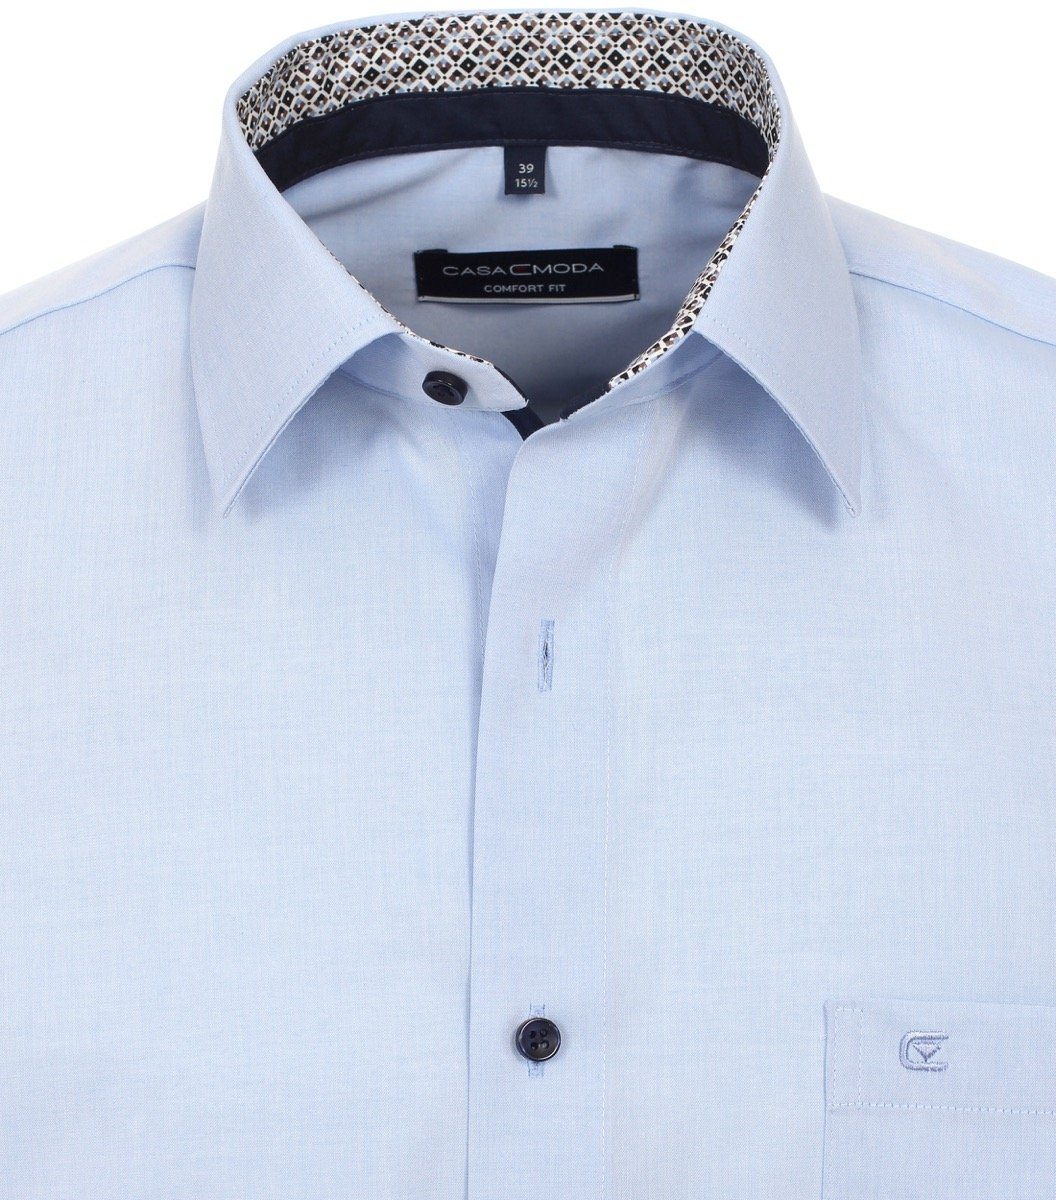 Einfarbig - Businesshemd Langarm Fit Blau Blau Businesshemd - - CASAMODA - Comfort (115)